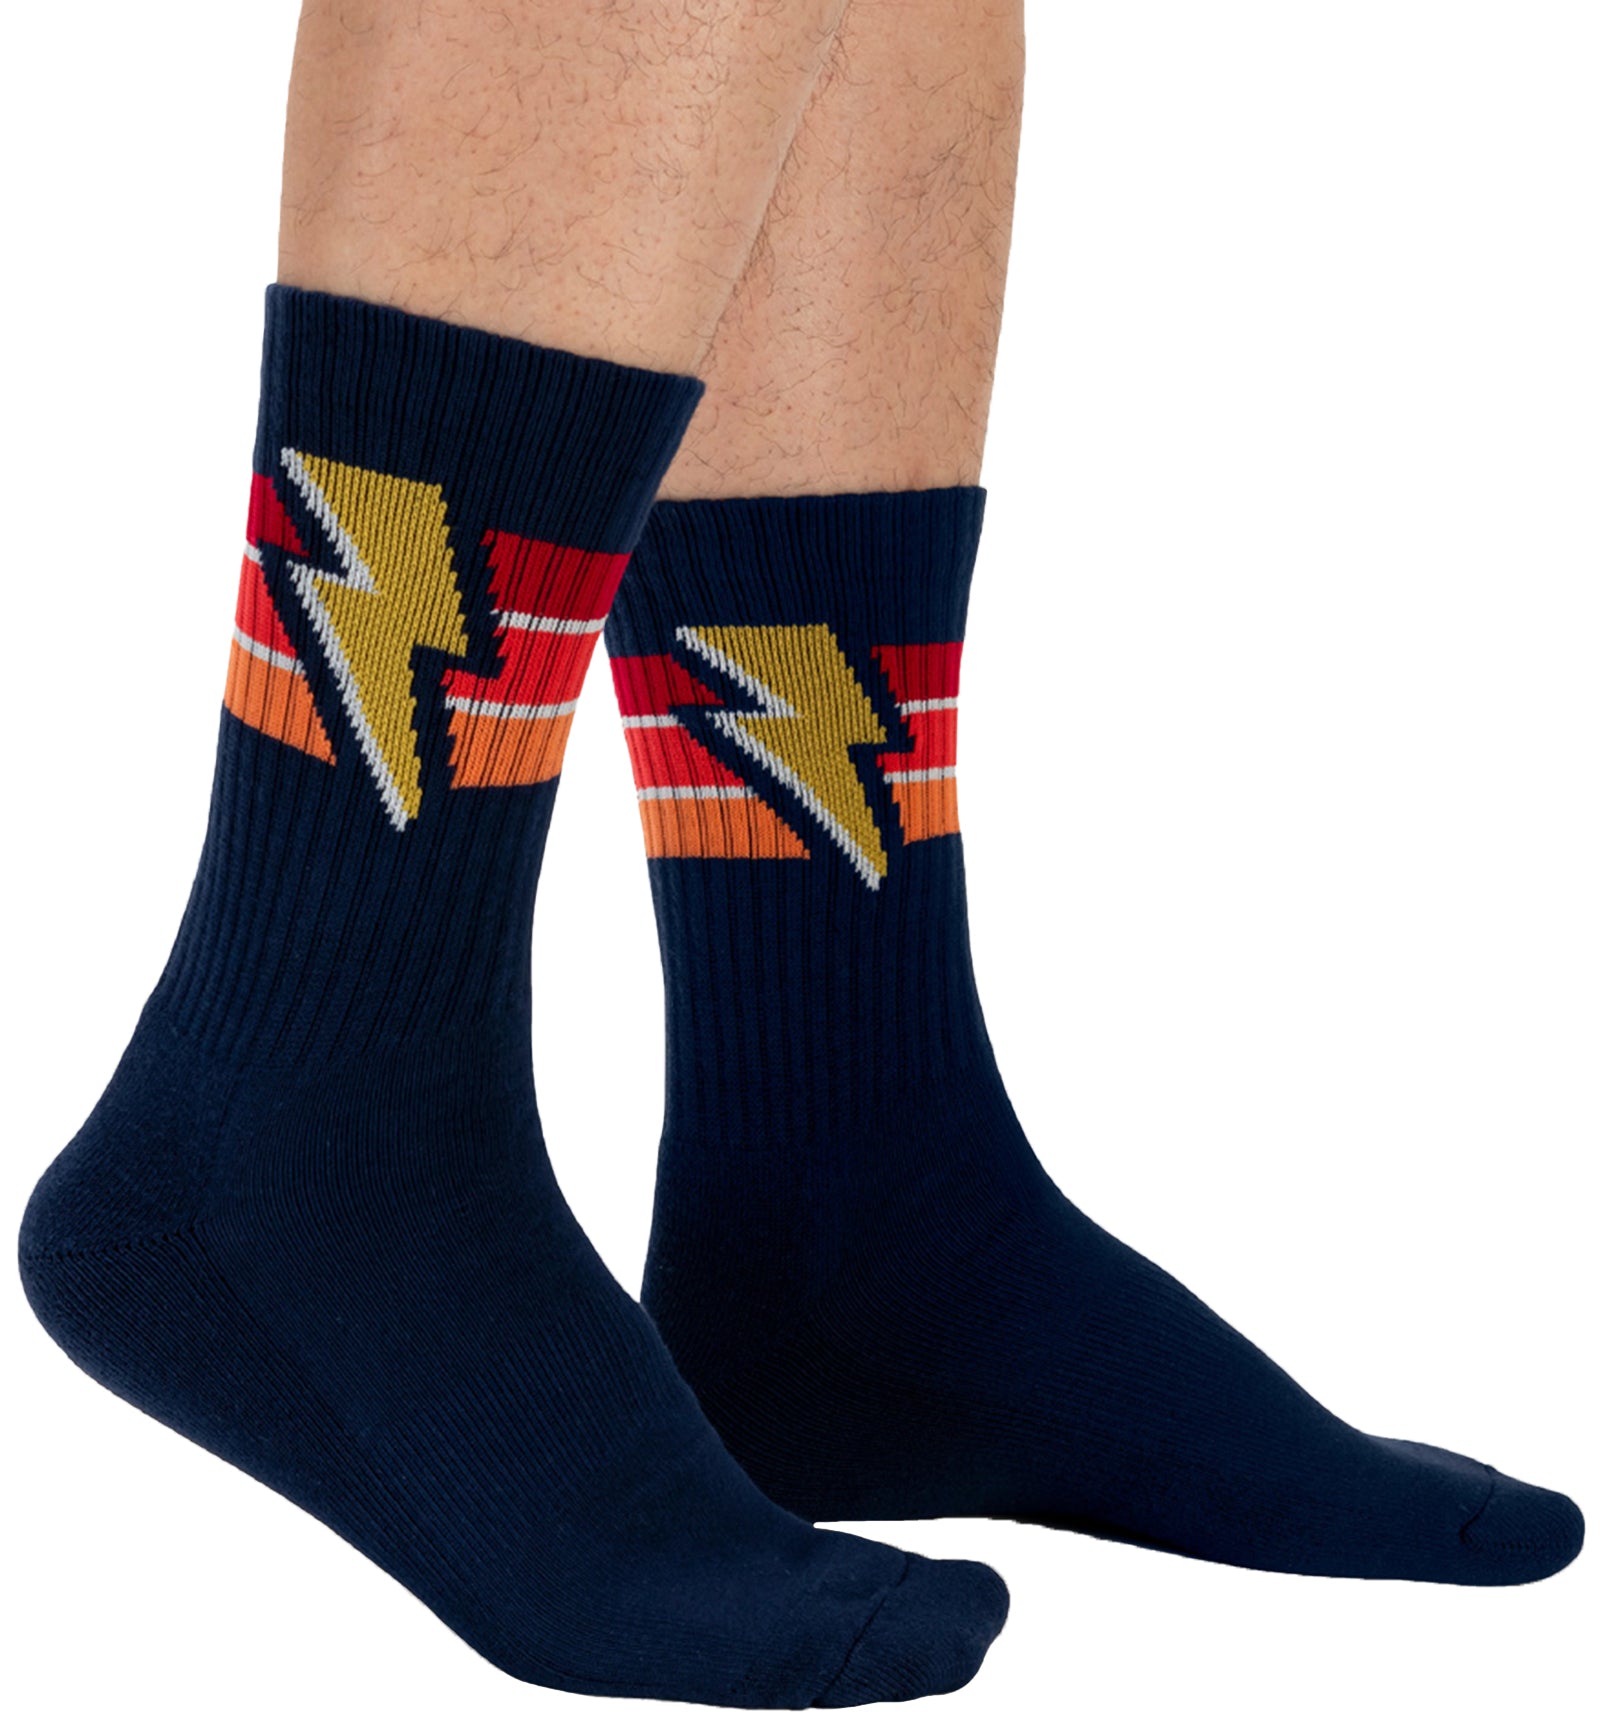 SOCK it to me Athletic Ribbed Crew Socks (R0010-1),Thunderstruck (Navy) - Thunderstruck (Navy),One Size